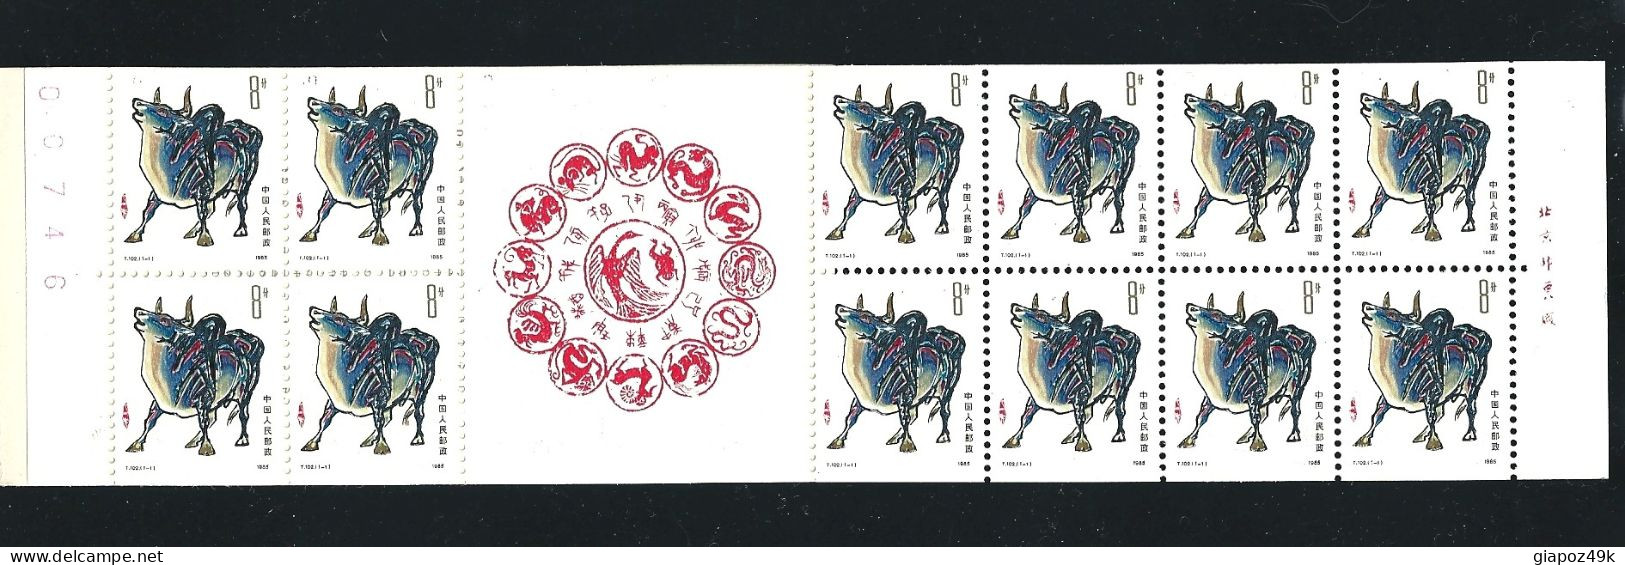 ● CINA 1985 ֍ Nuovo Anno ● Bue ️֍ Carnet Con N. 1988 ● Serie Completa ● Cat. ? € ️ ● Lotto N. 800/n ️● - Blocks & Kleinbögen